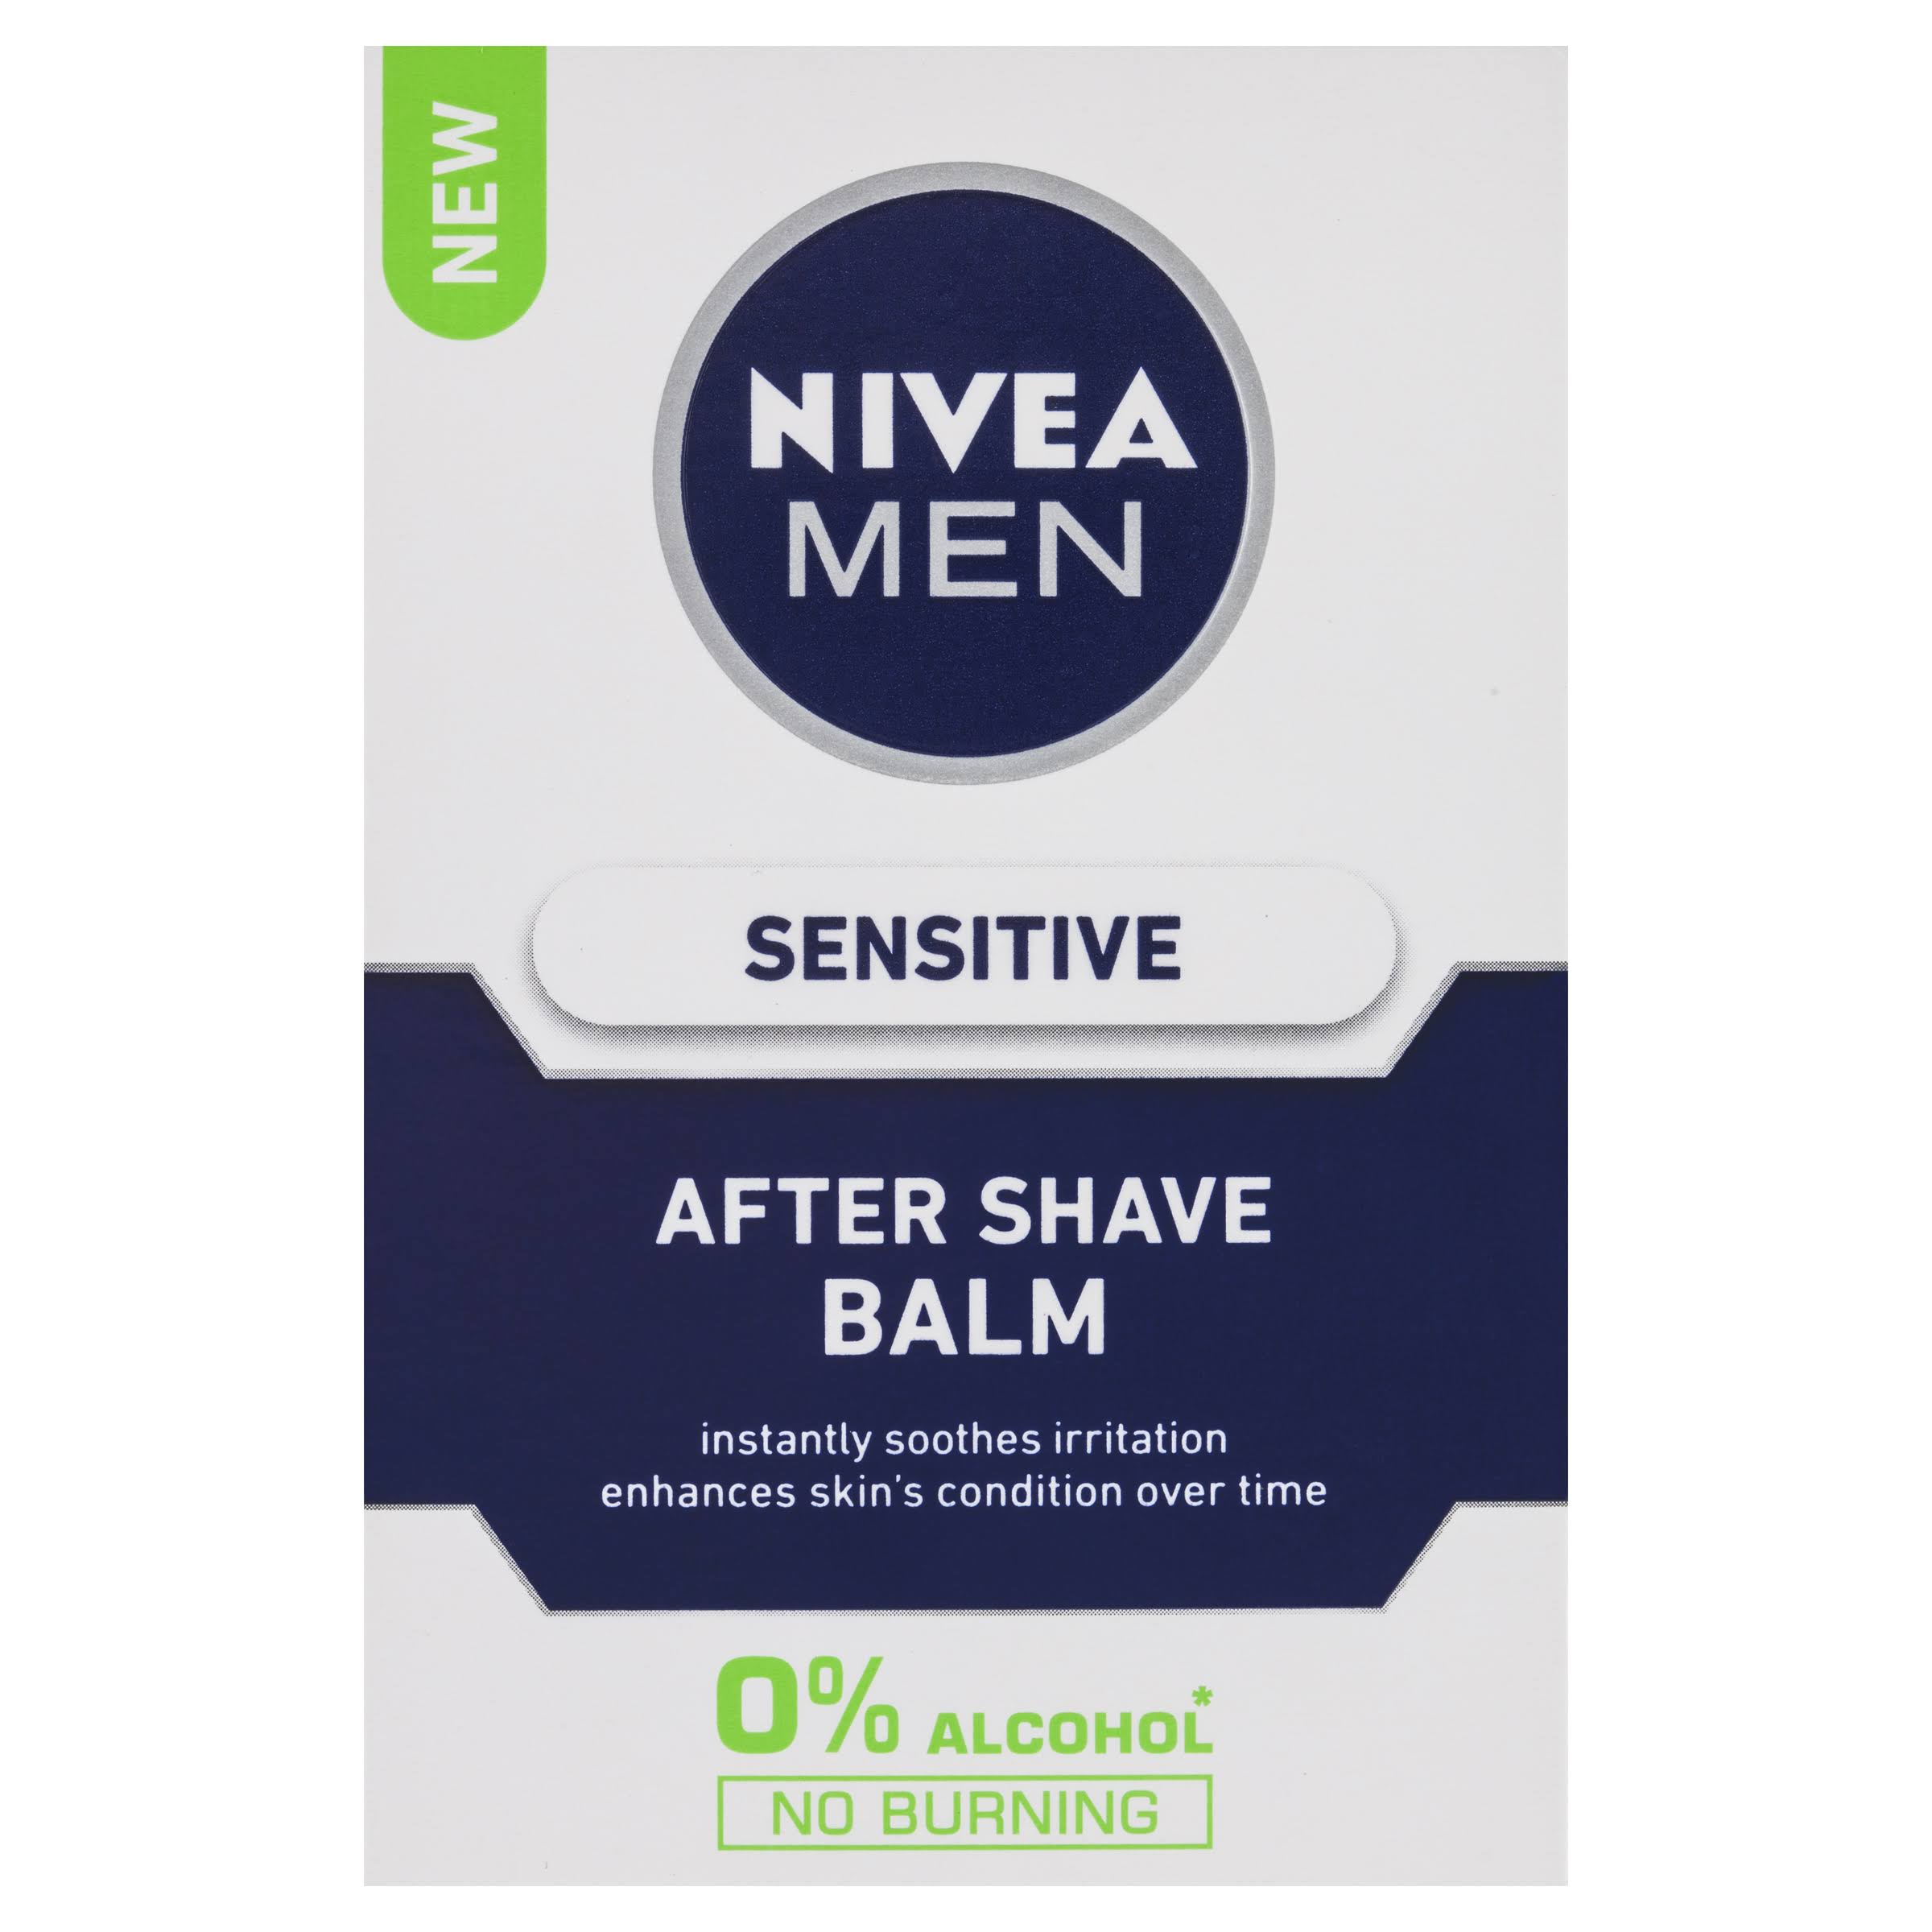 Nivea Men Sensitive Post Shave Balm - 100ml